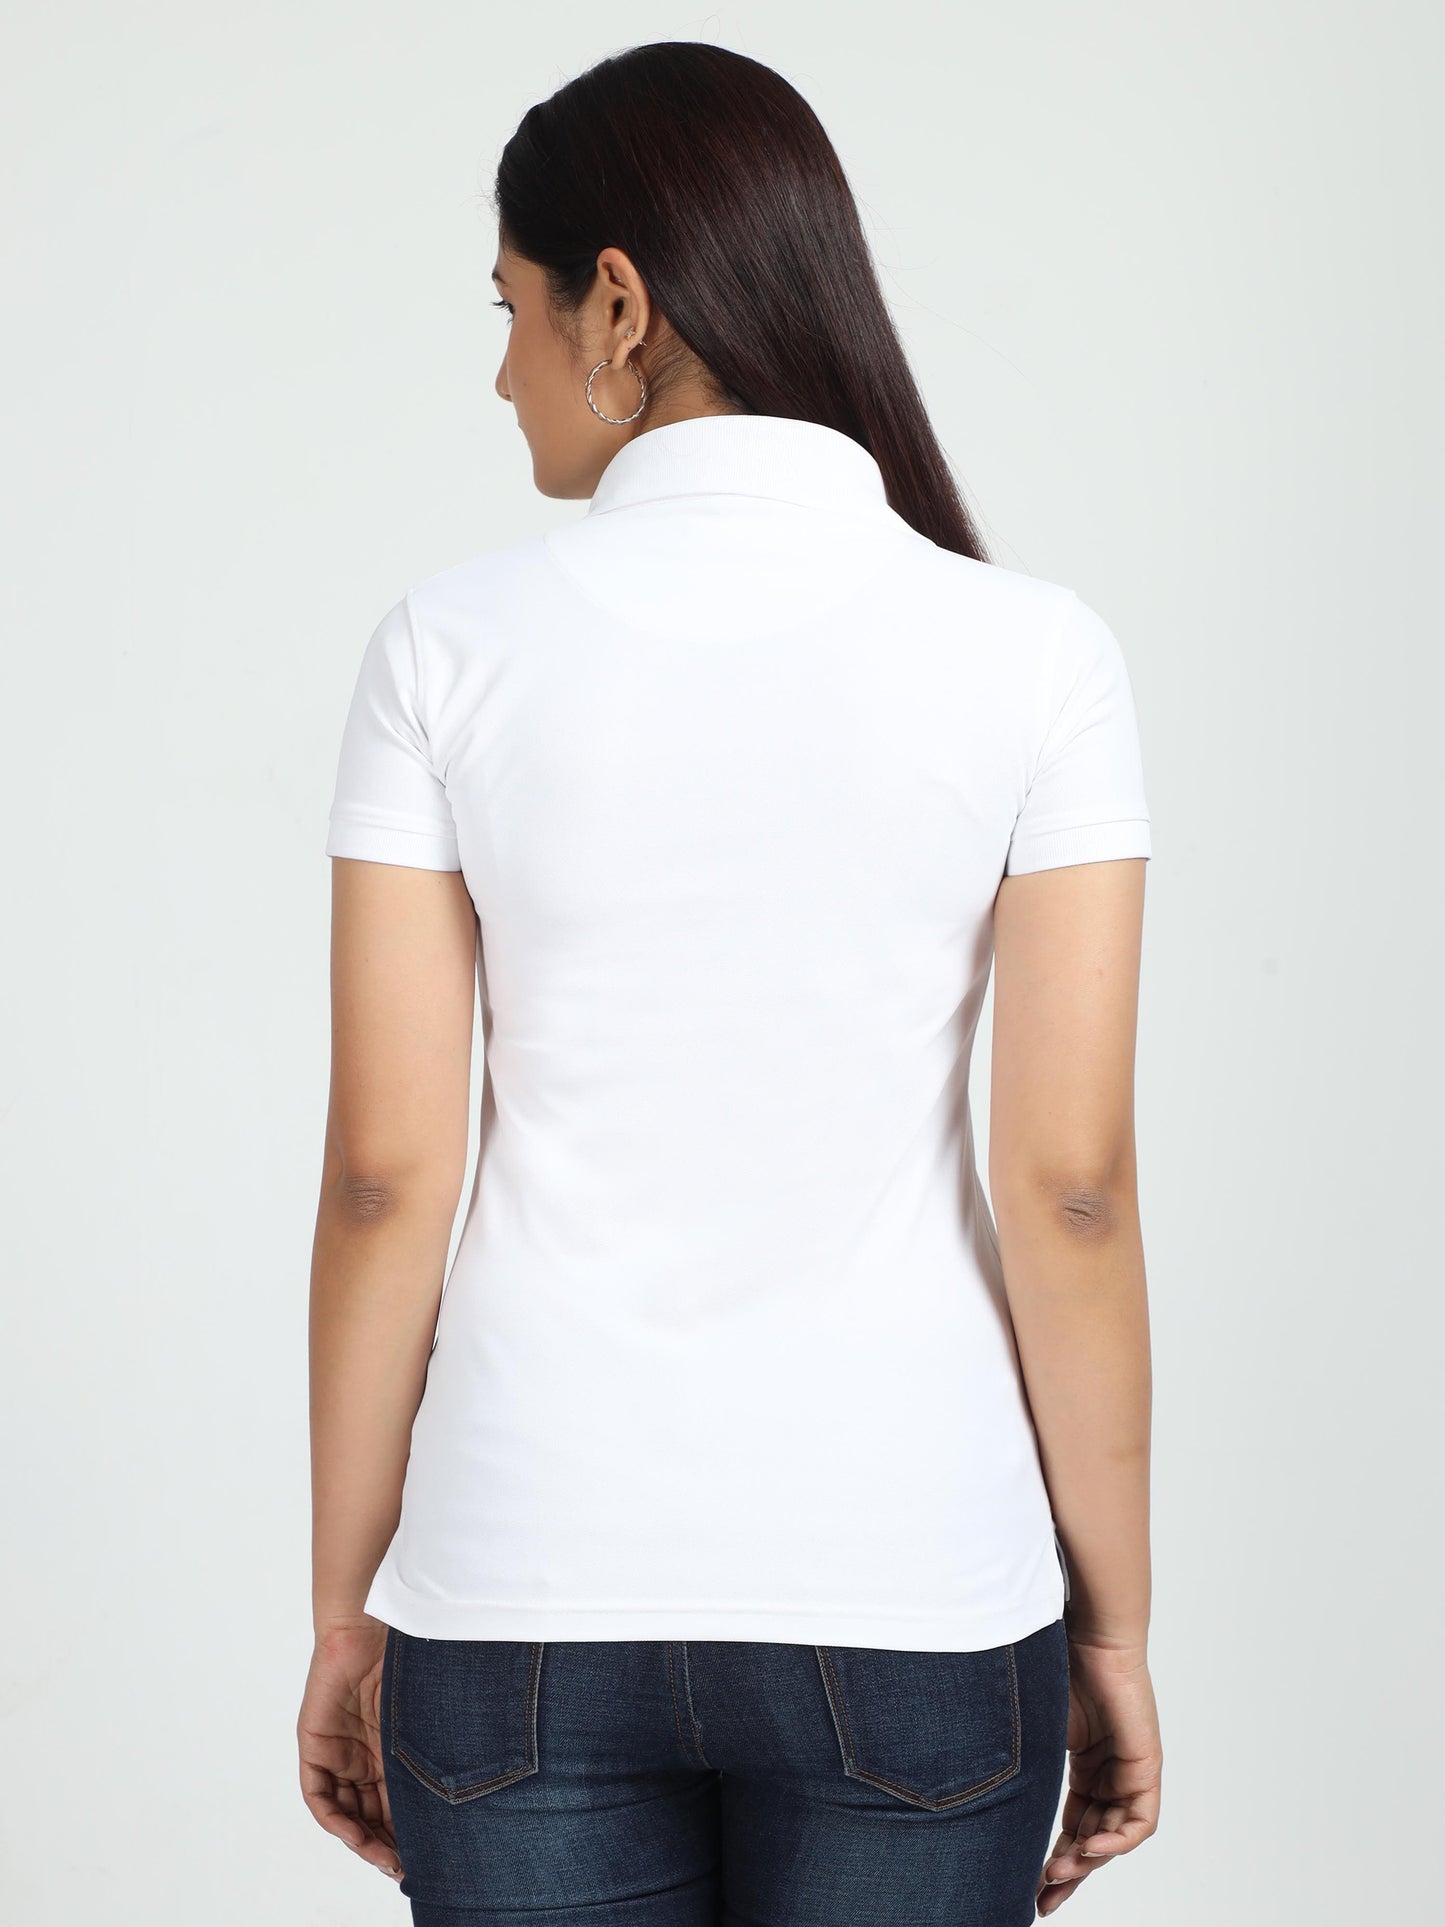 White Women's Polo T-shirt